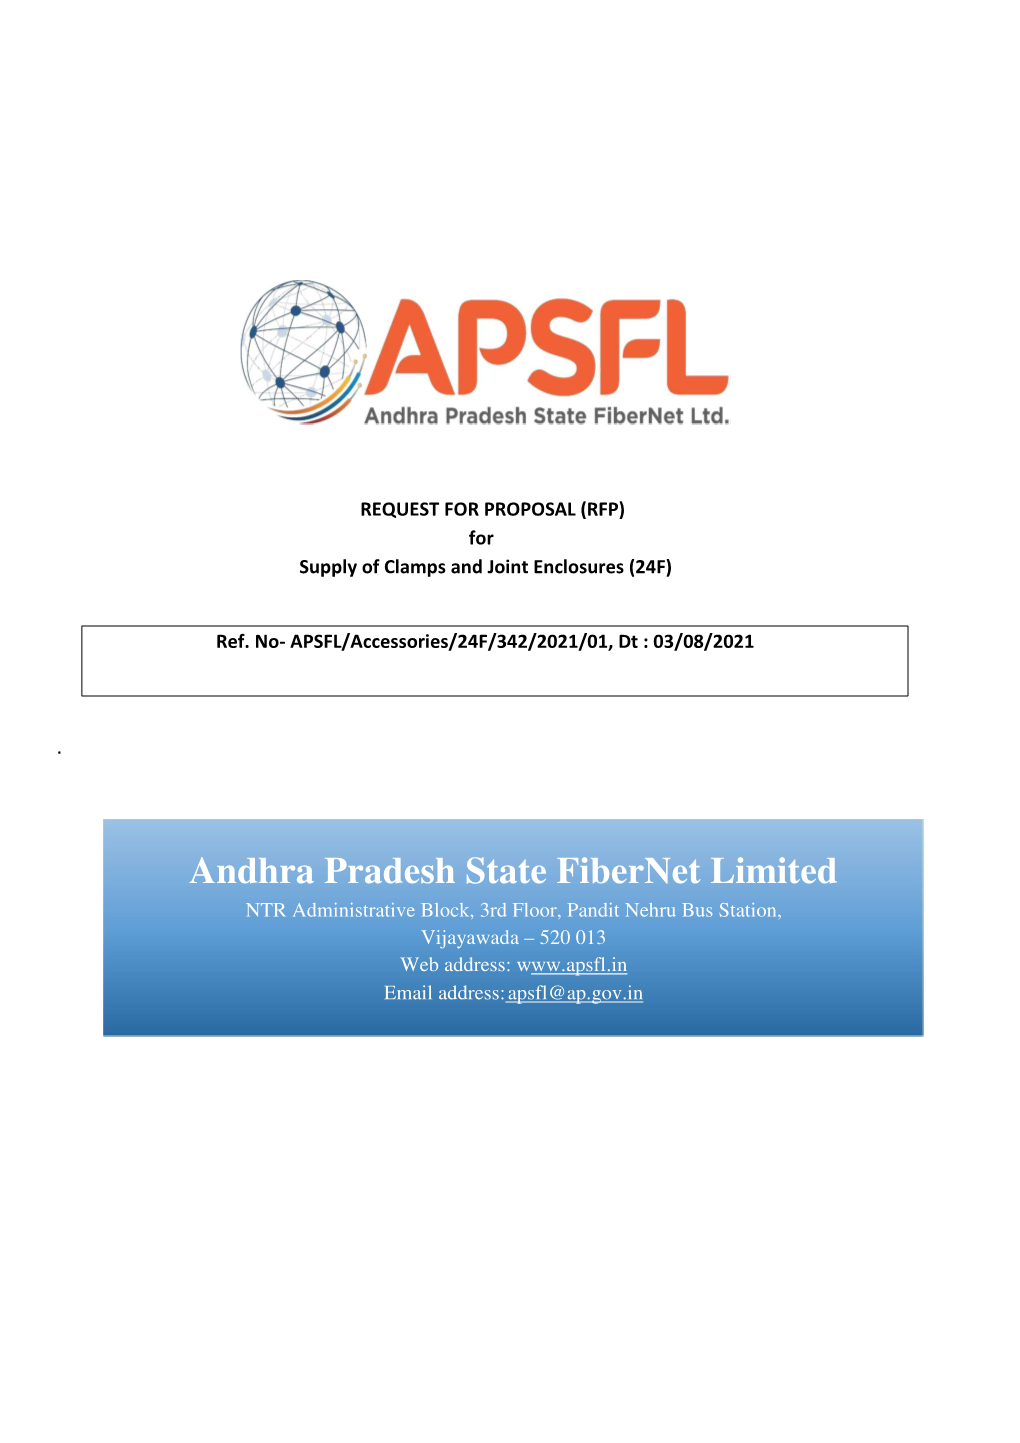 Andhra Pradesh State Fibernet Limited